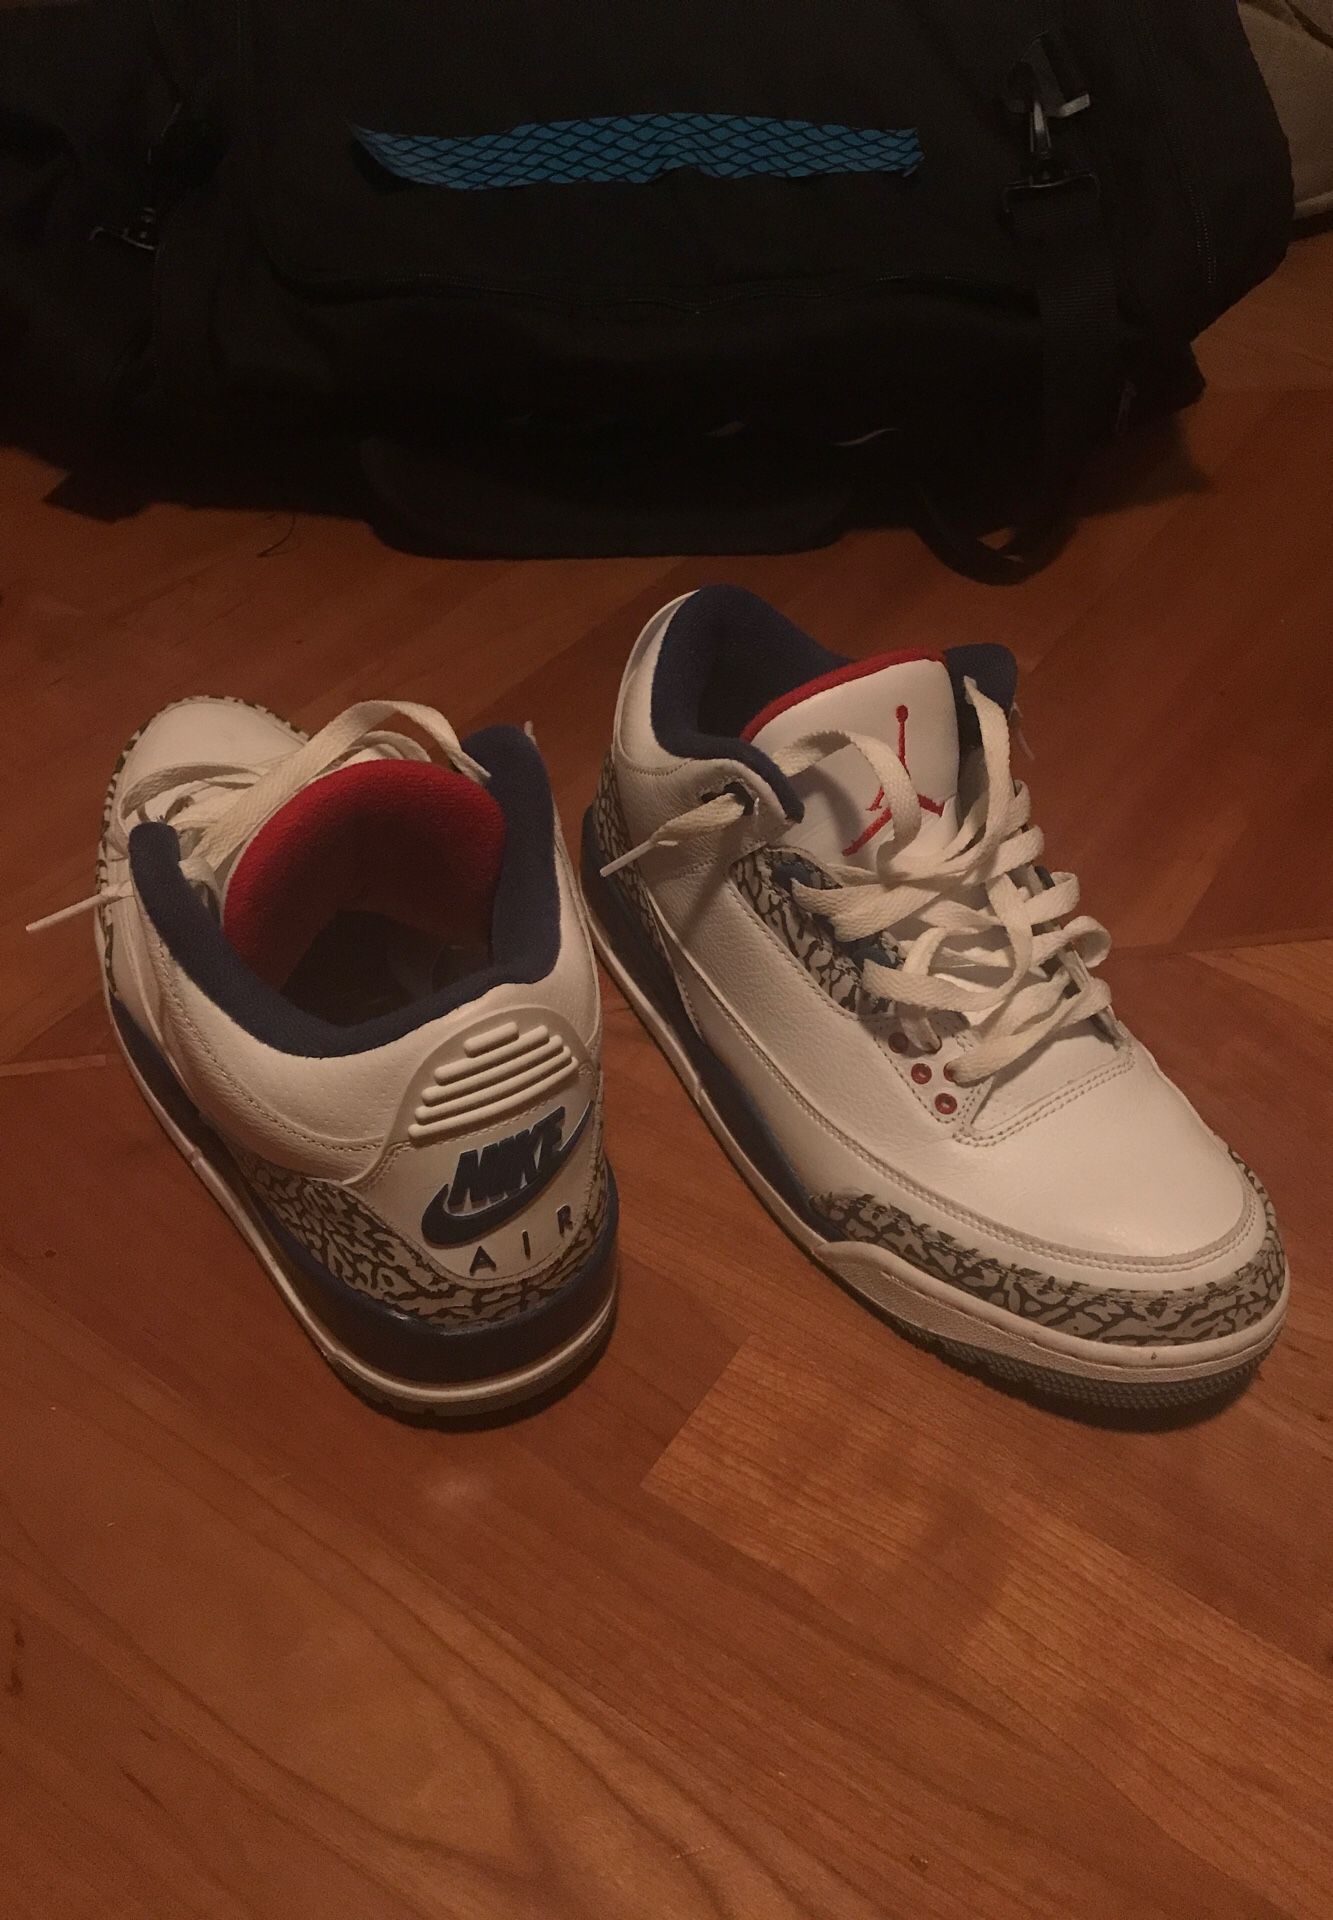 Jordan 3 True Blue with Nike Air, size 8.5